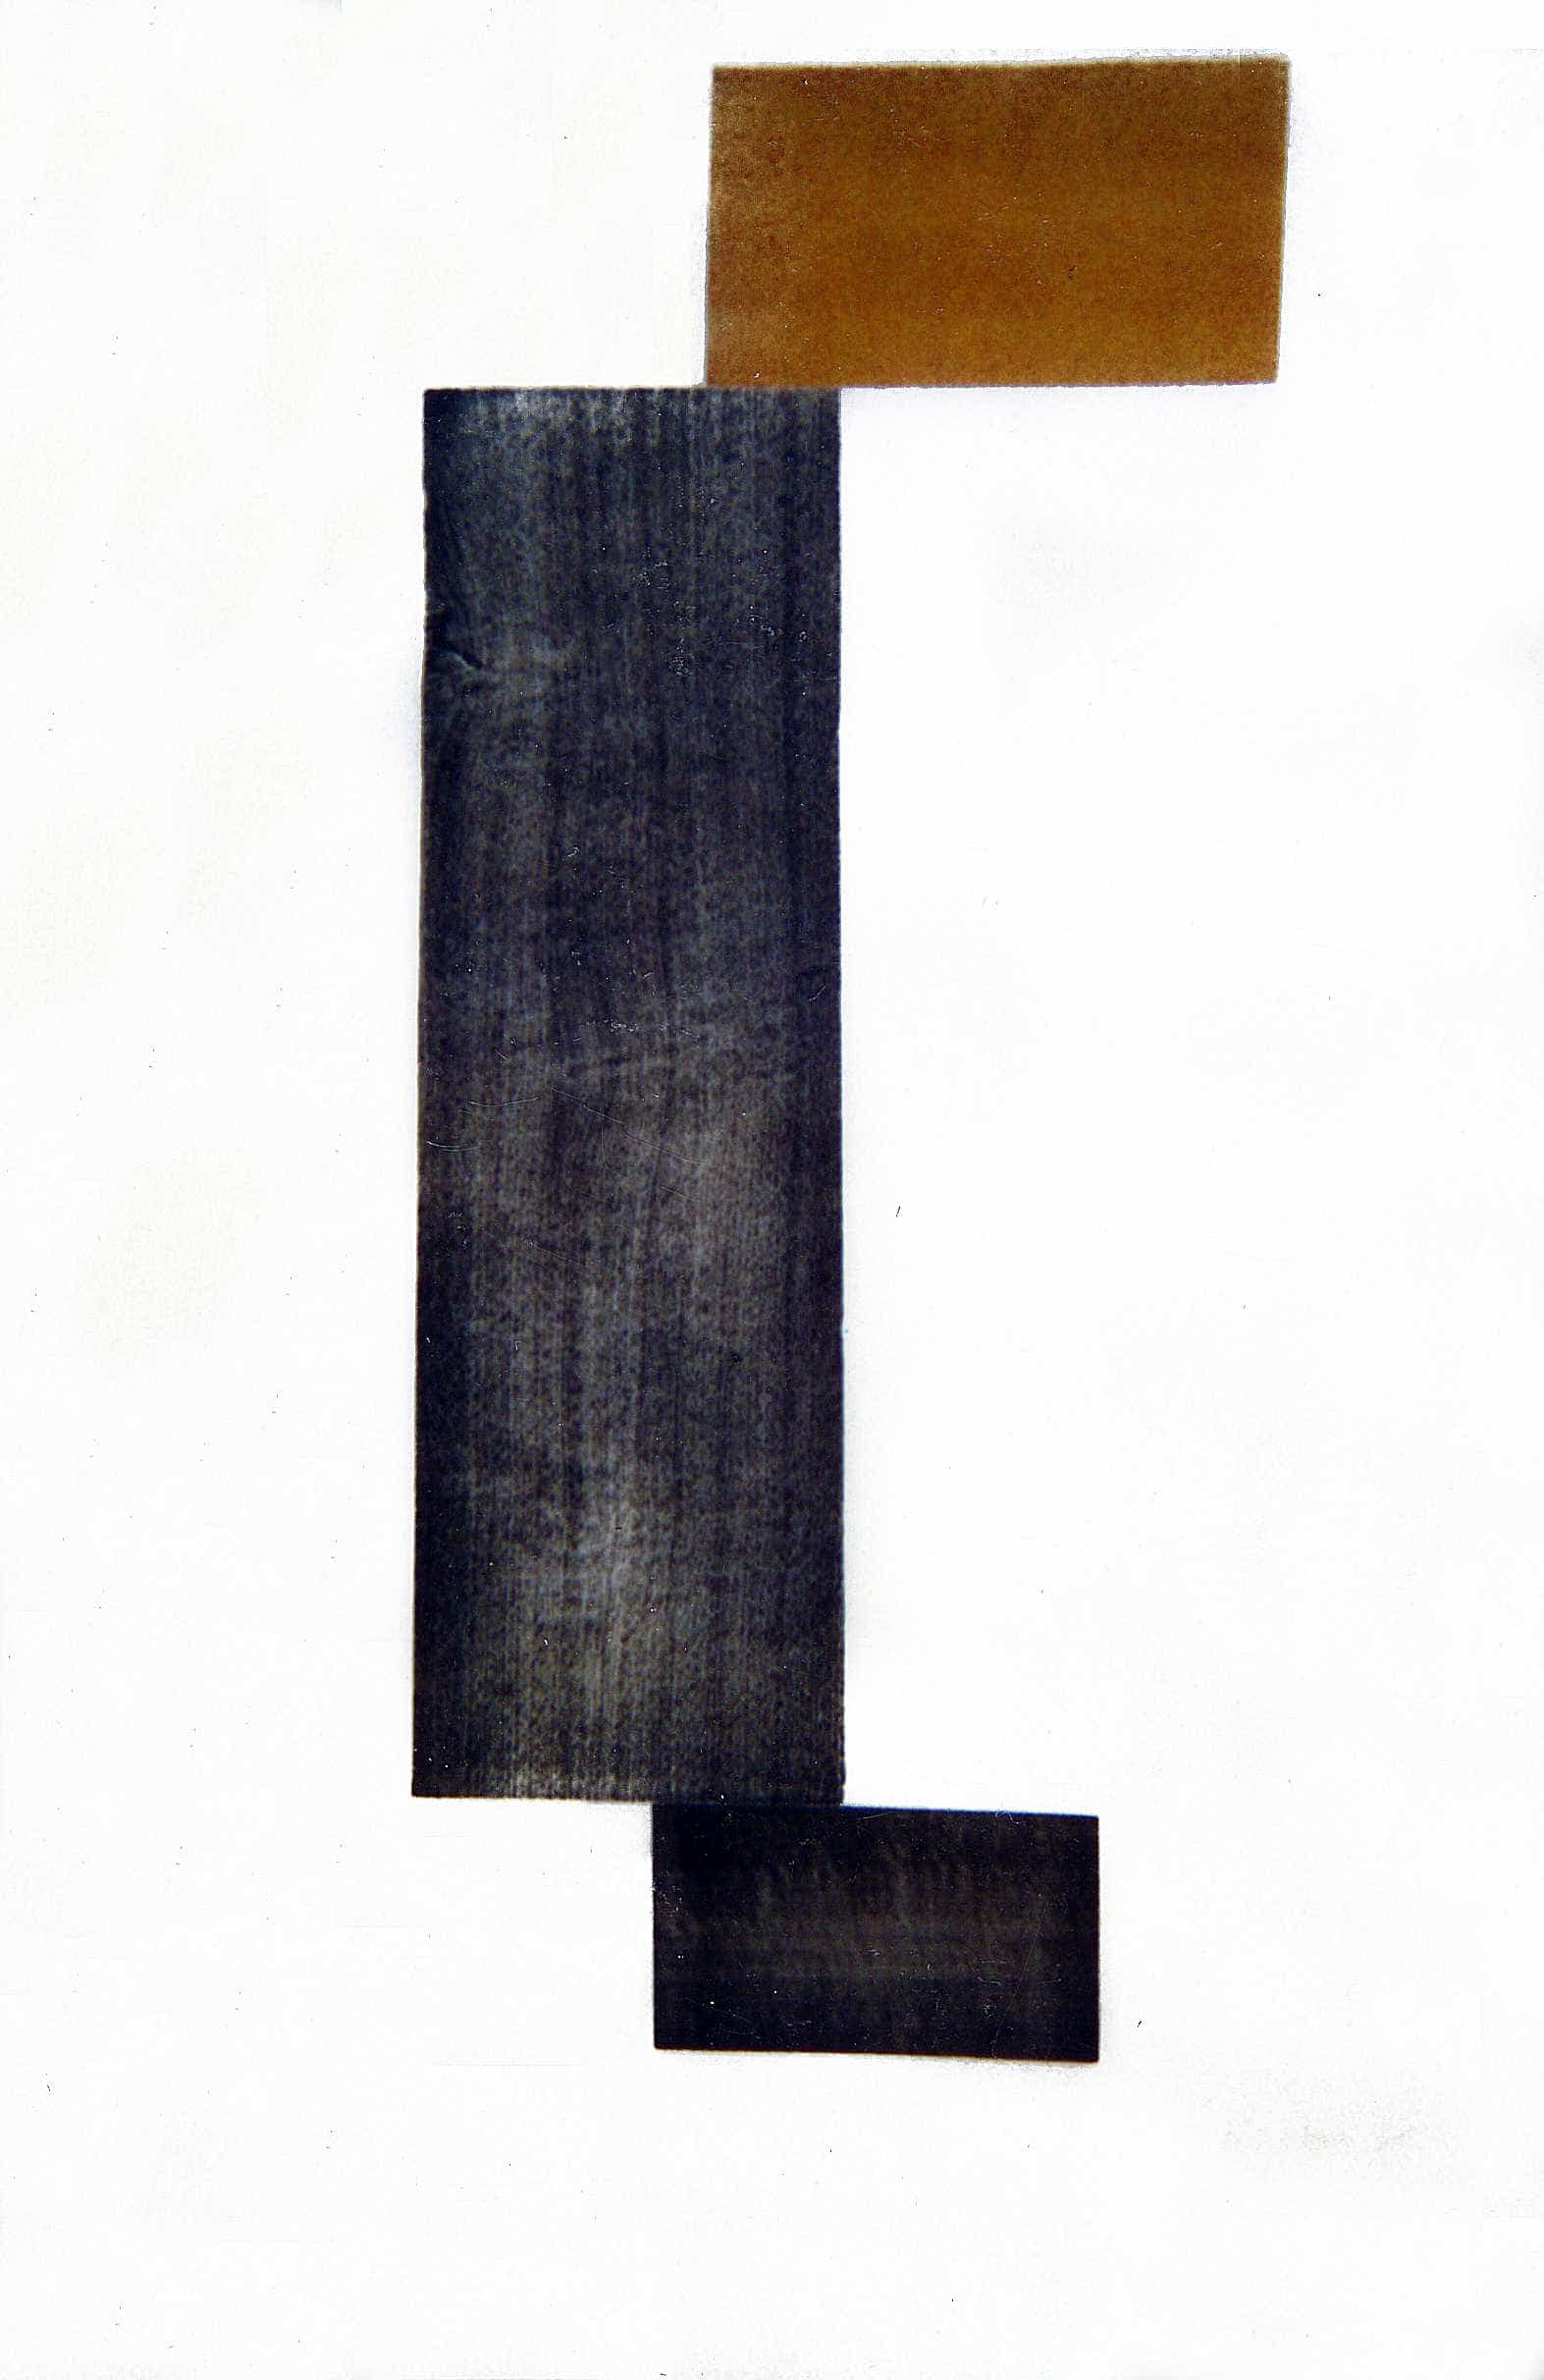 Joel Shapiro, Monotype D, 1985